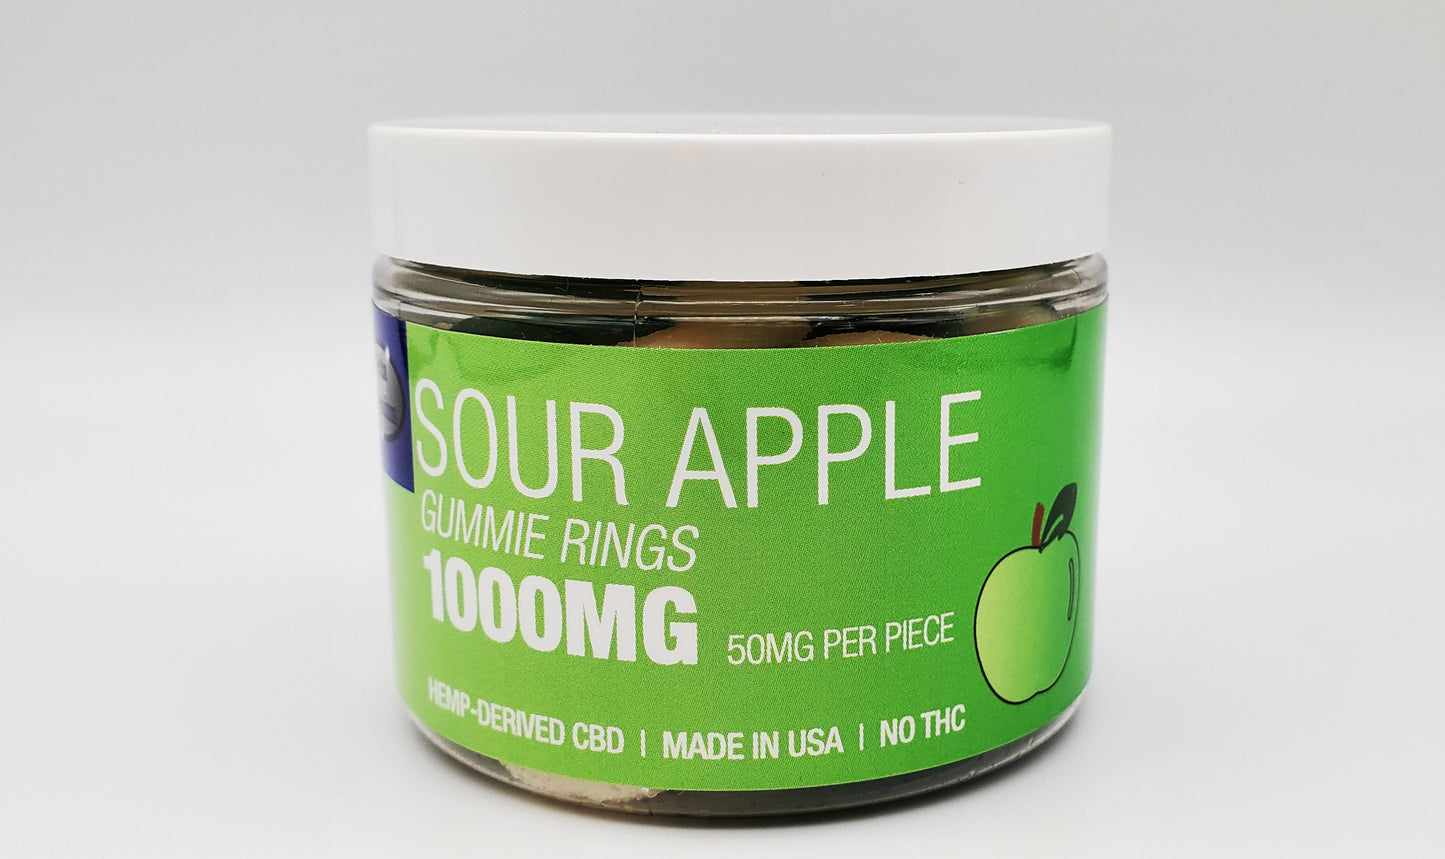 Delta Premium CBD 1000 Sour Apple Gummie Rings. Hemp-Derived CBD with NO THC. 50mg CBD Gummies, Made in USA.